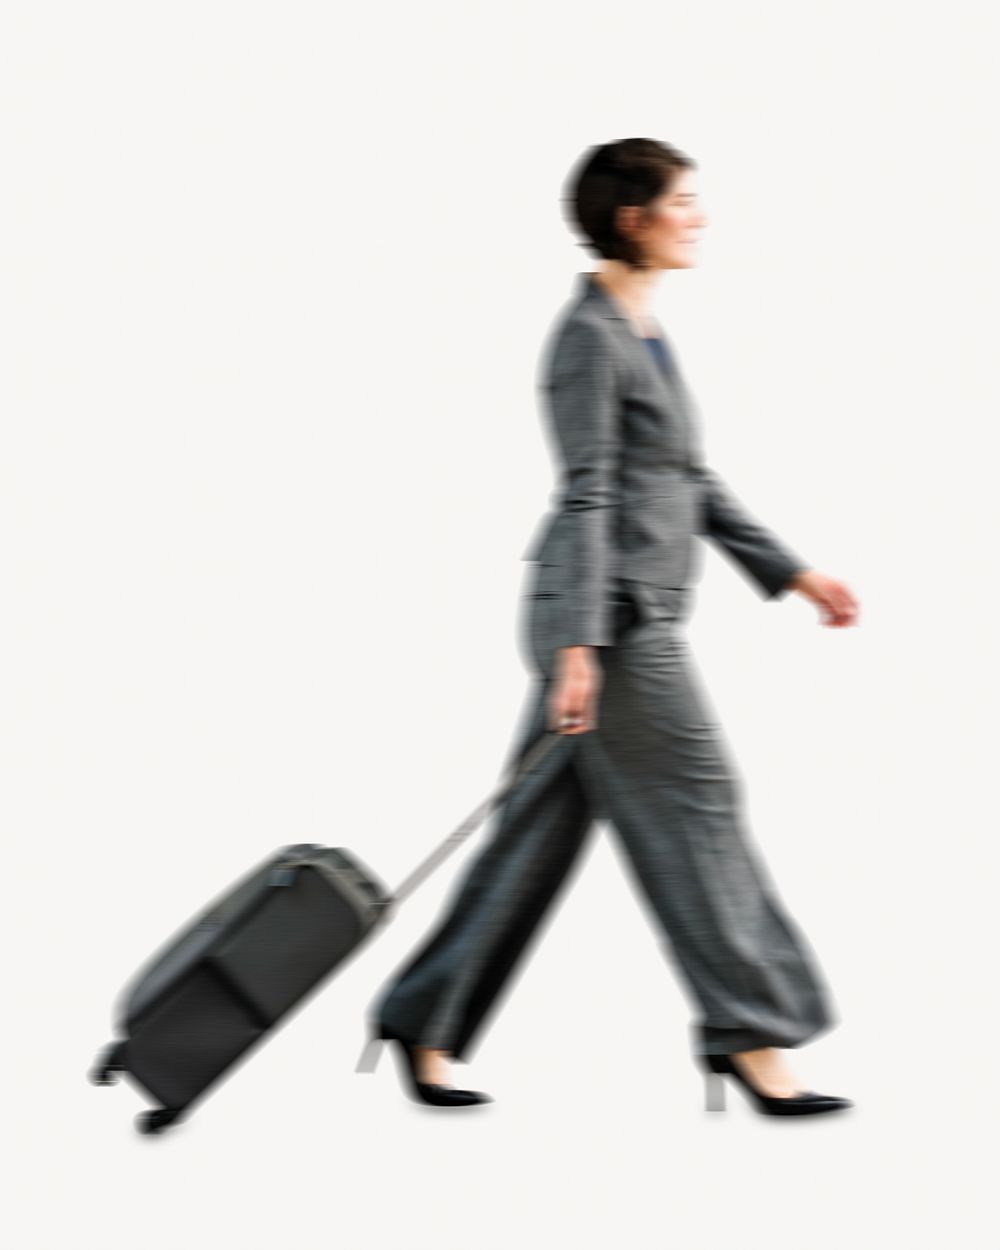 Traveling professional businesswoman isolated image on white